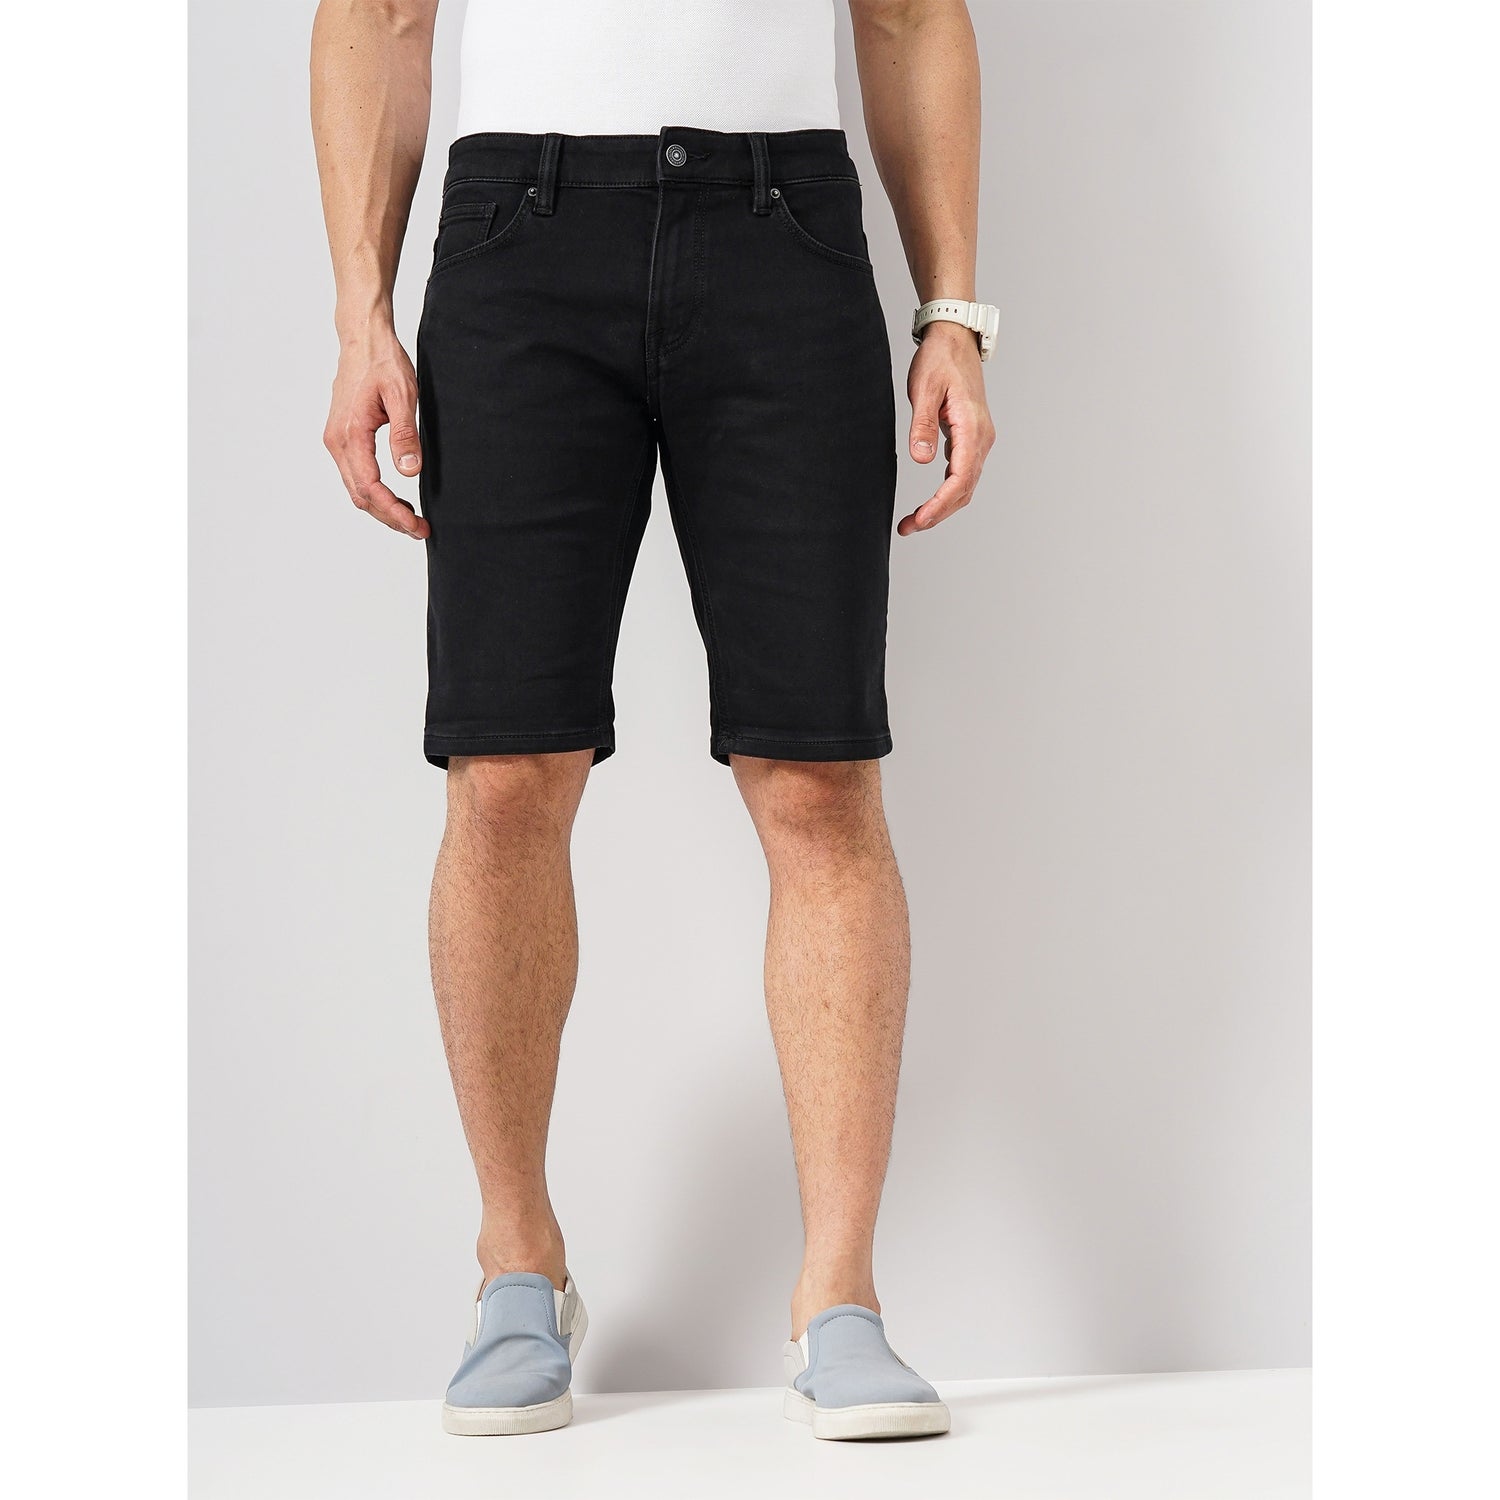 Men Black Solid Regular Fit Cotton Knit Casual Shorts (BOKNITBM)